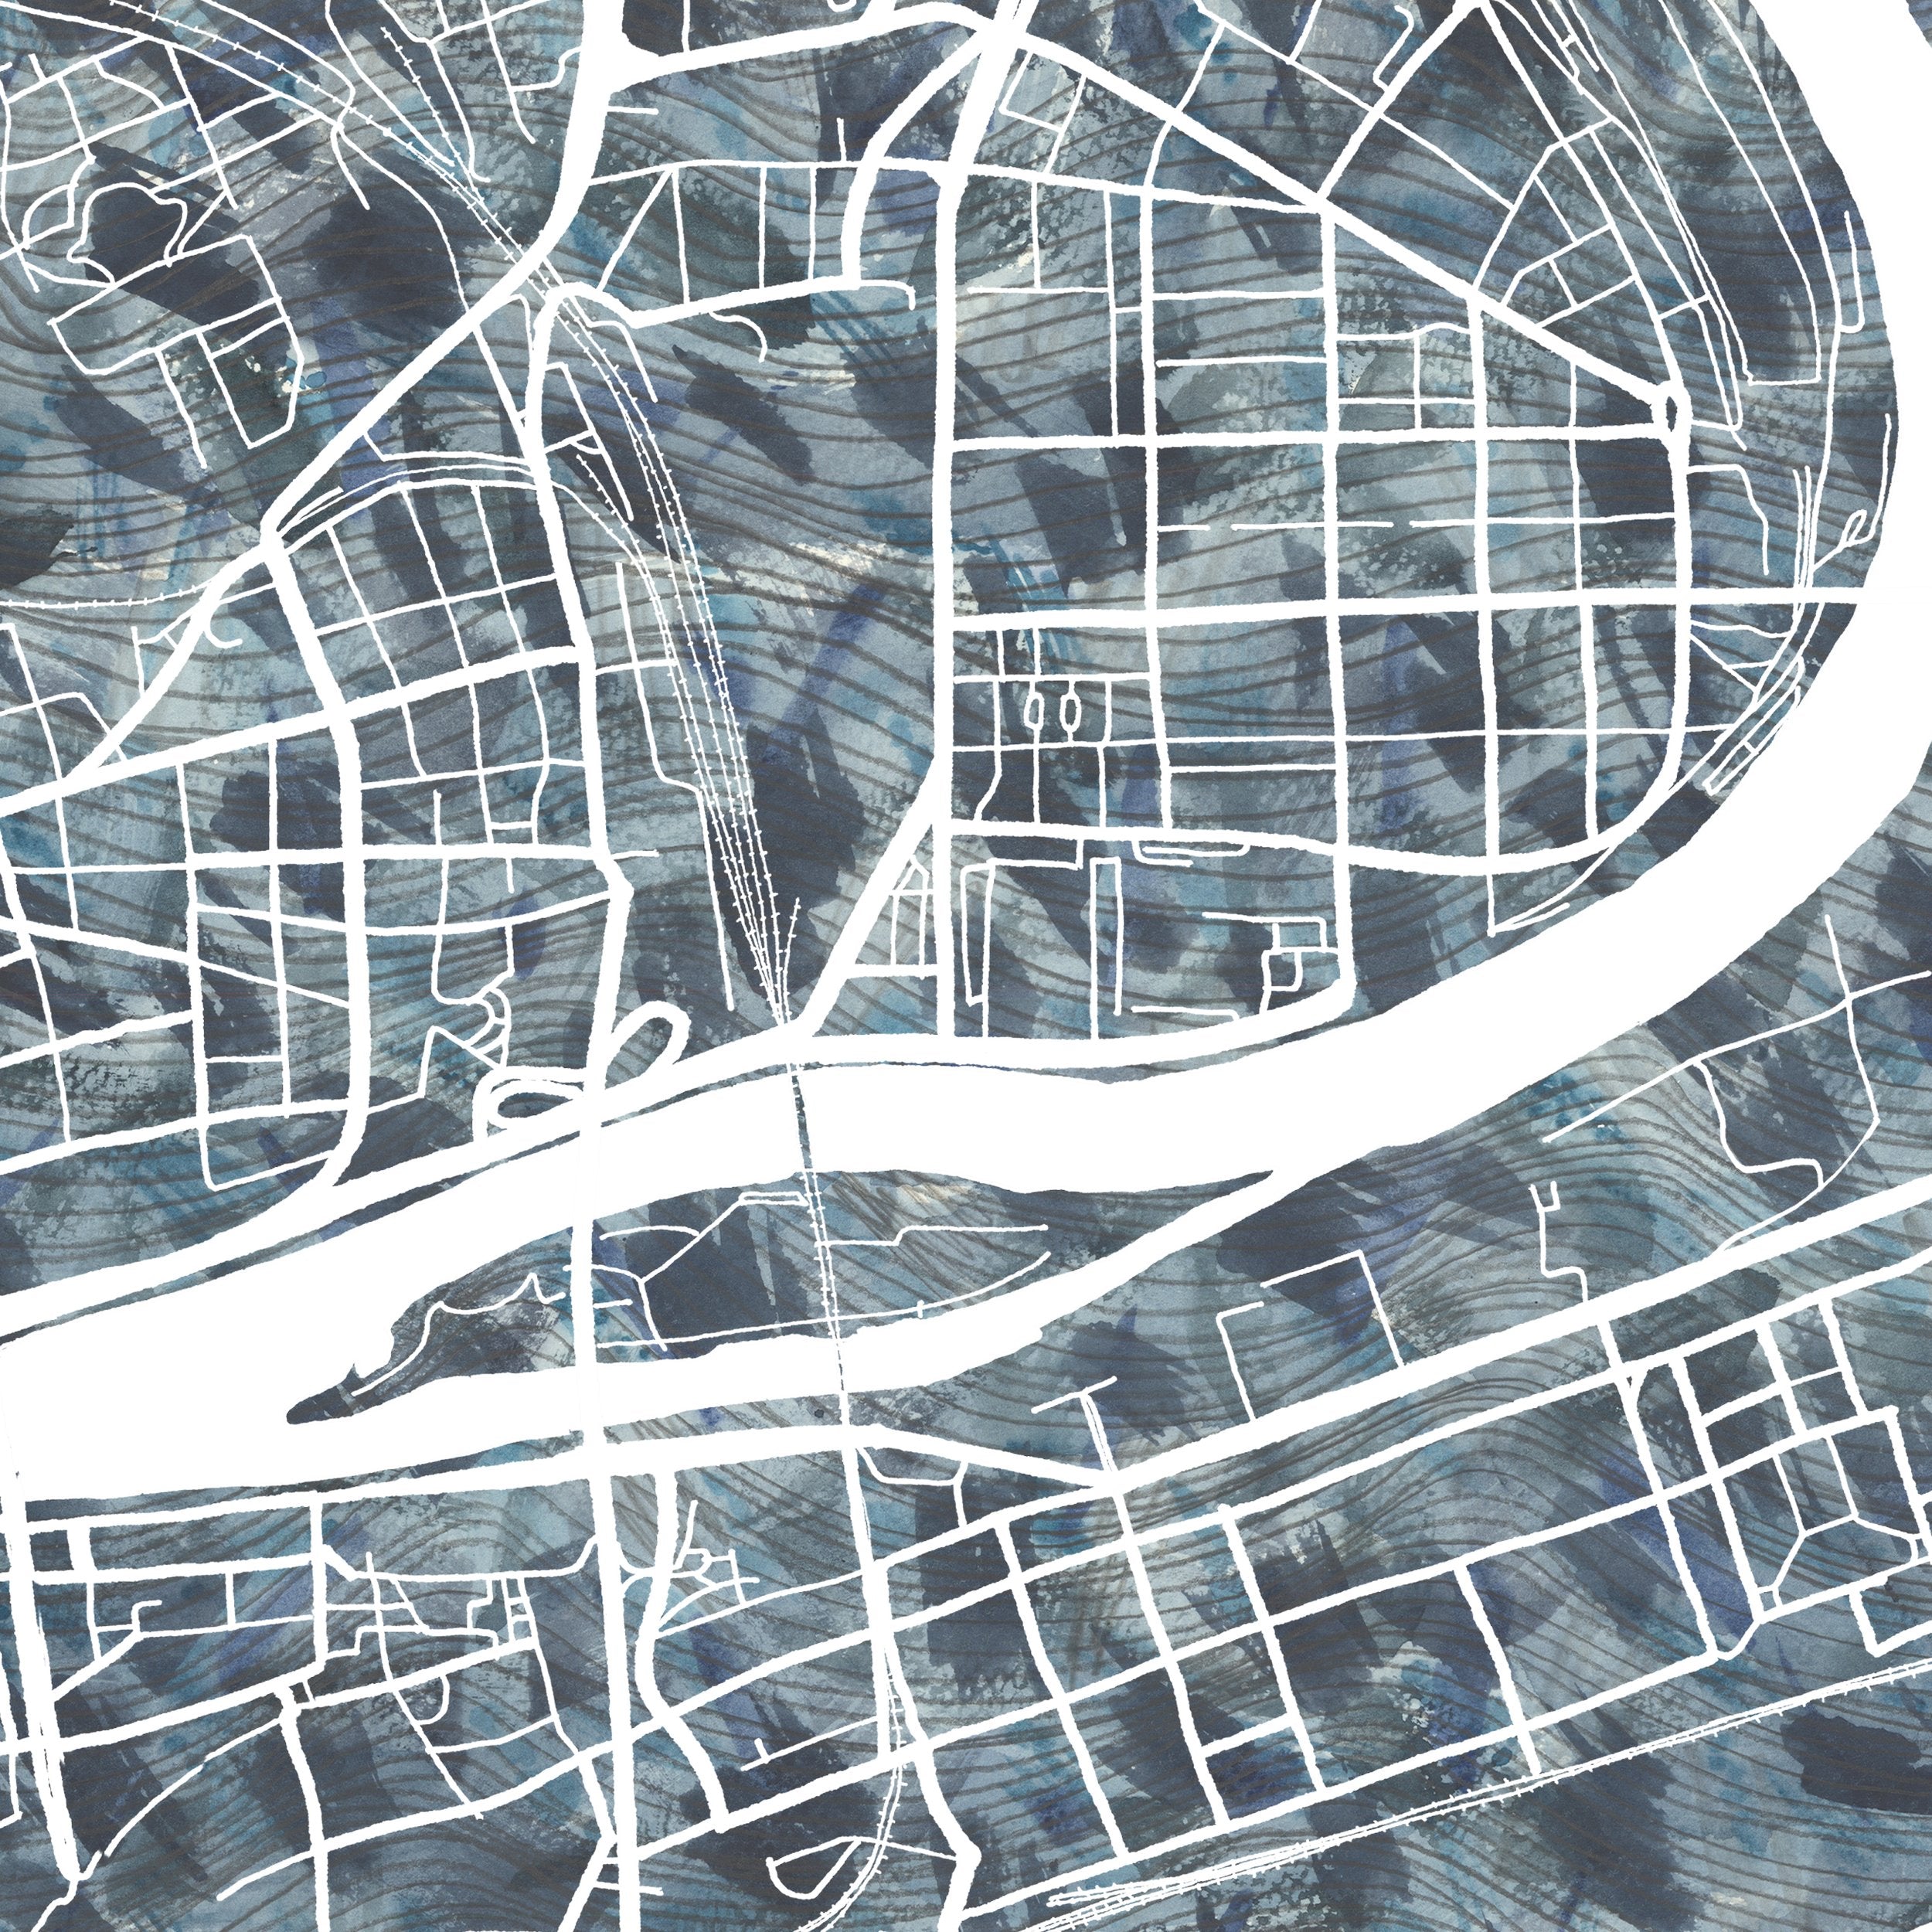 PRAGUE Urban Fabrics City Map: PRINT